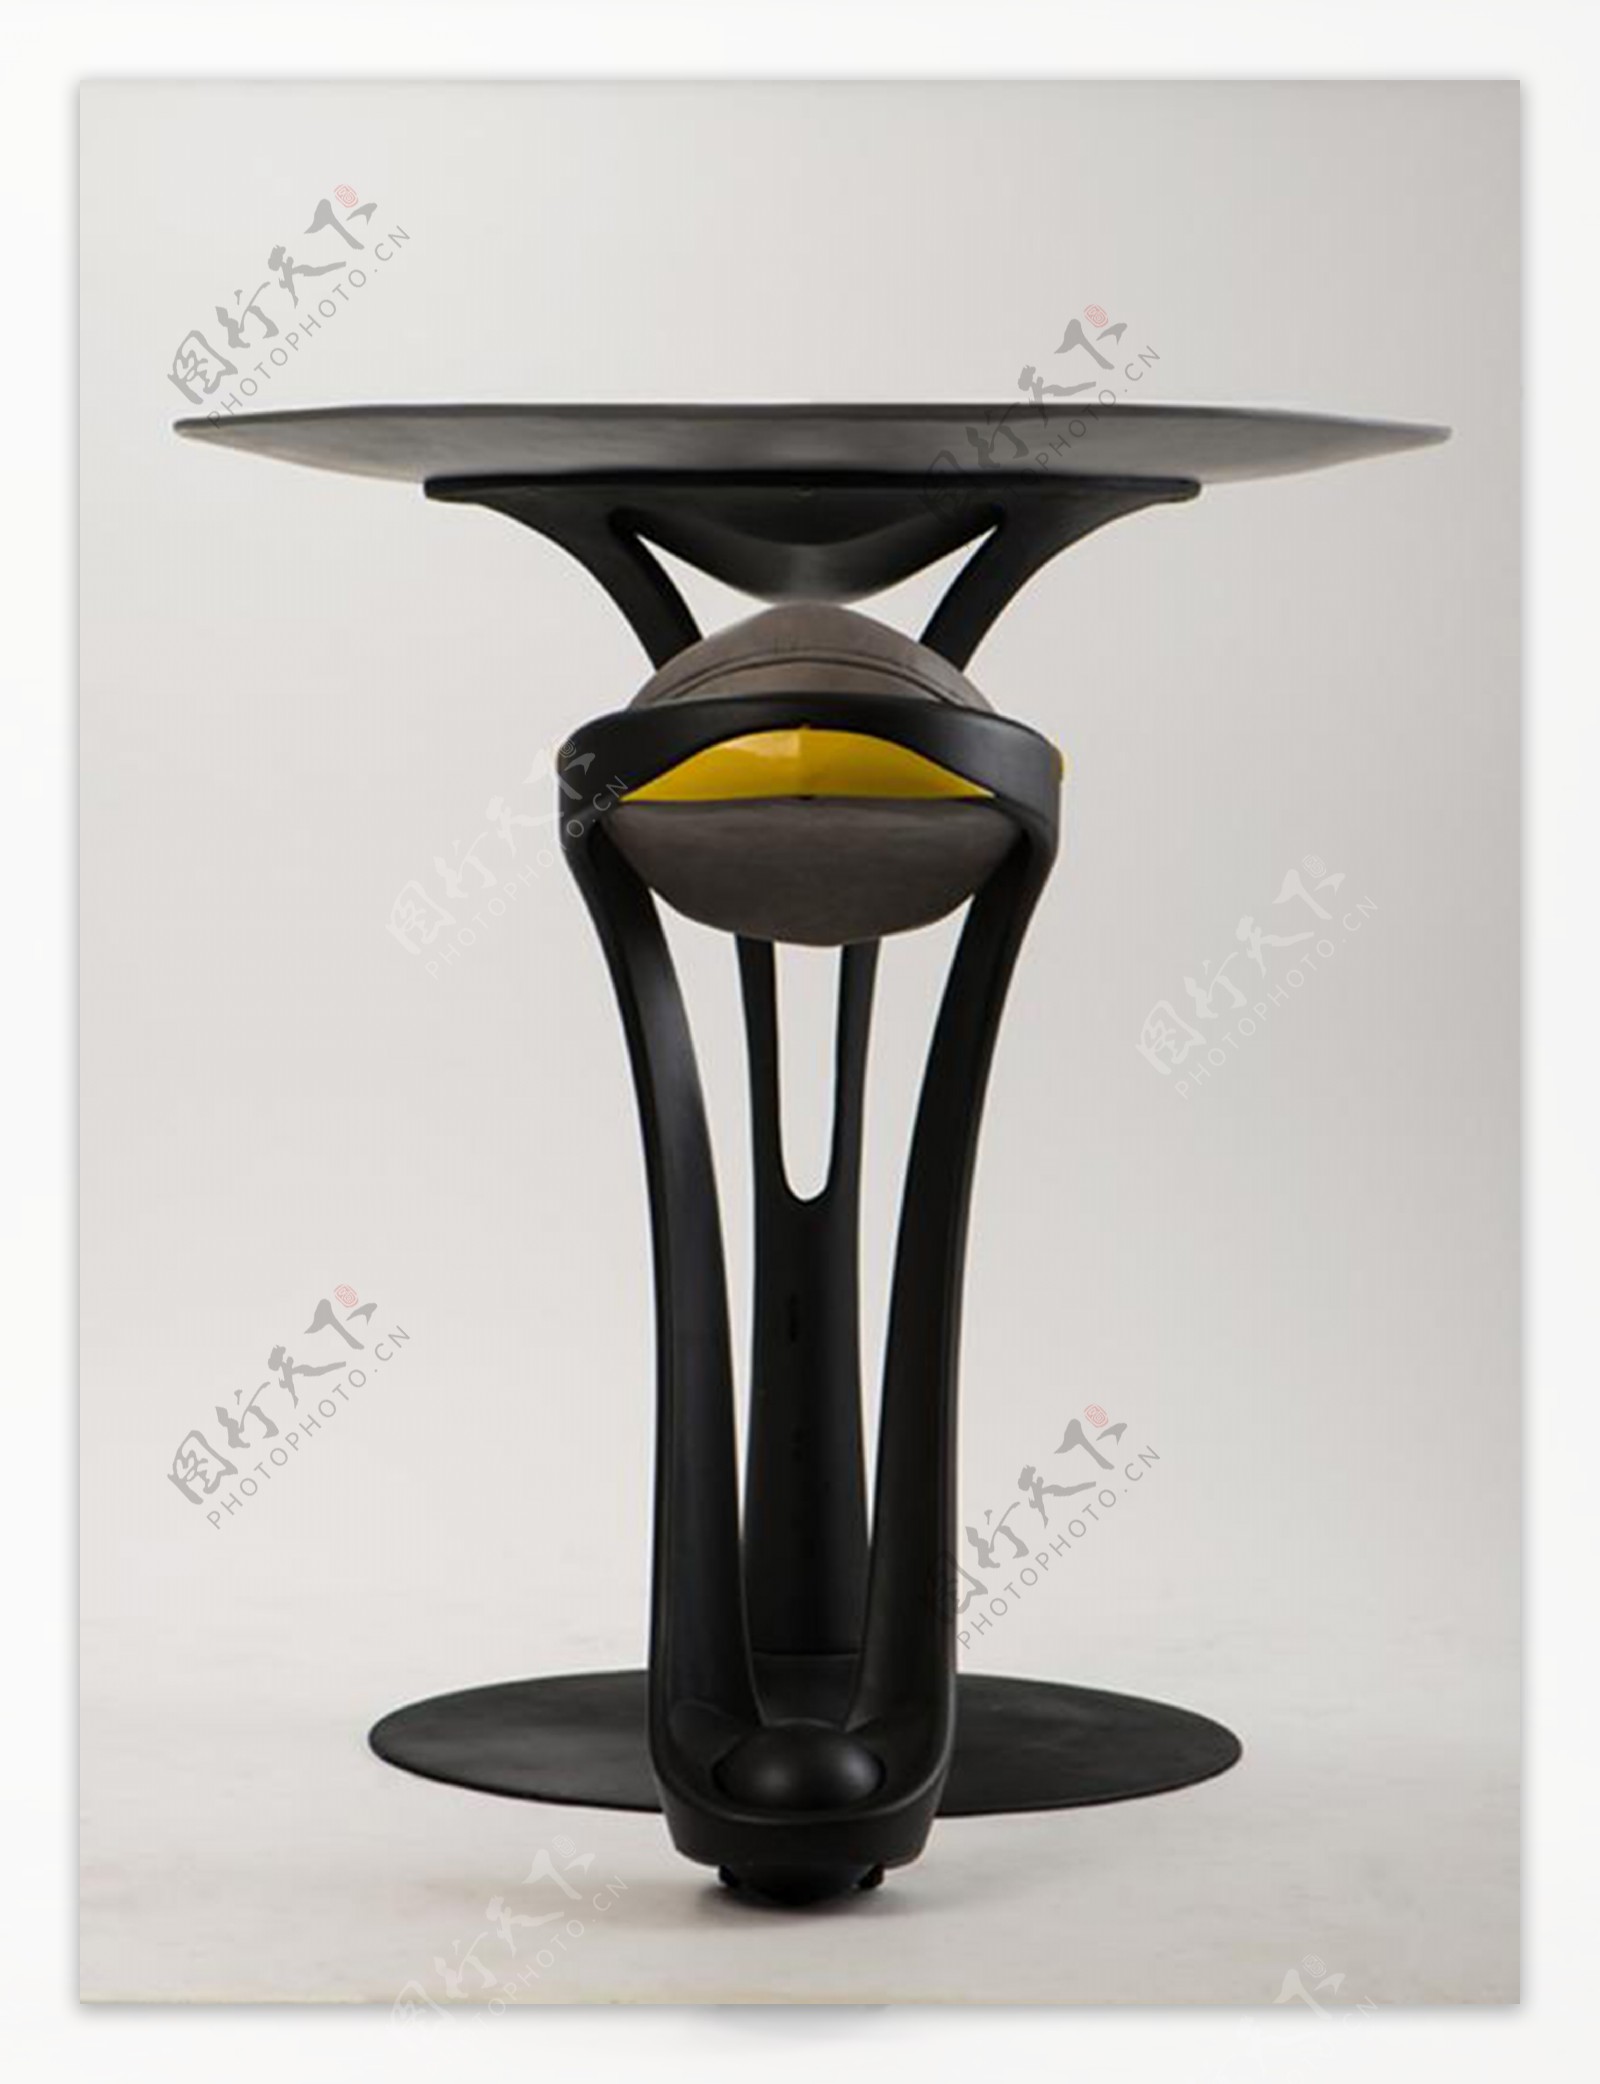 Opus创意平衡椅子设计